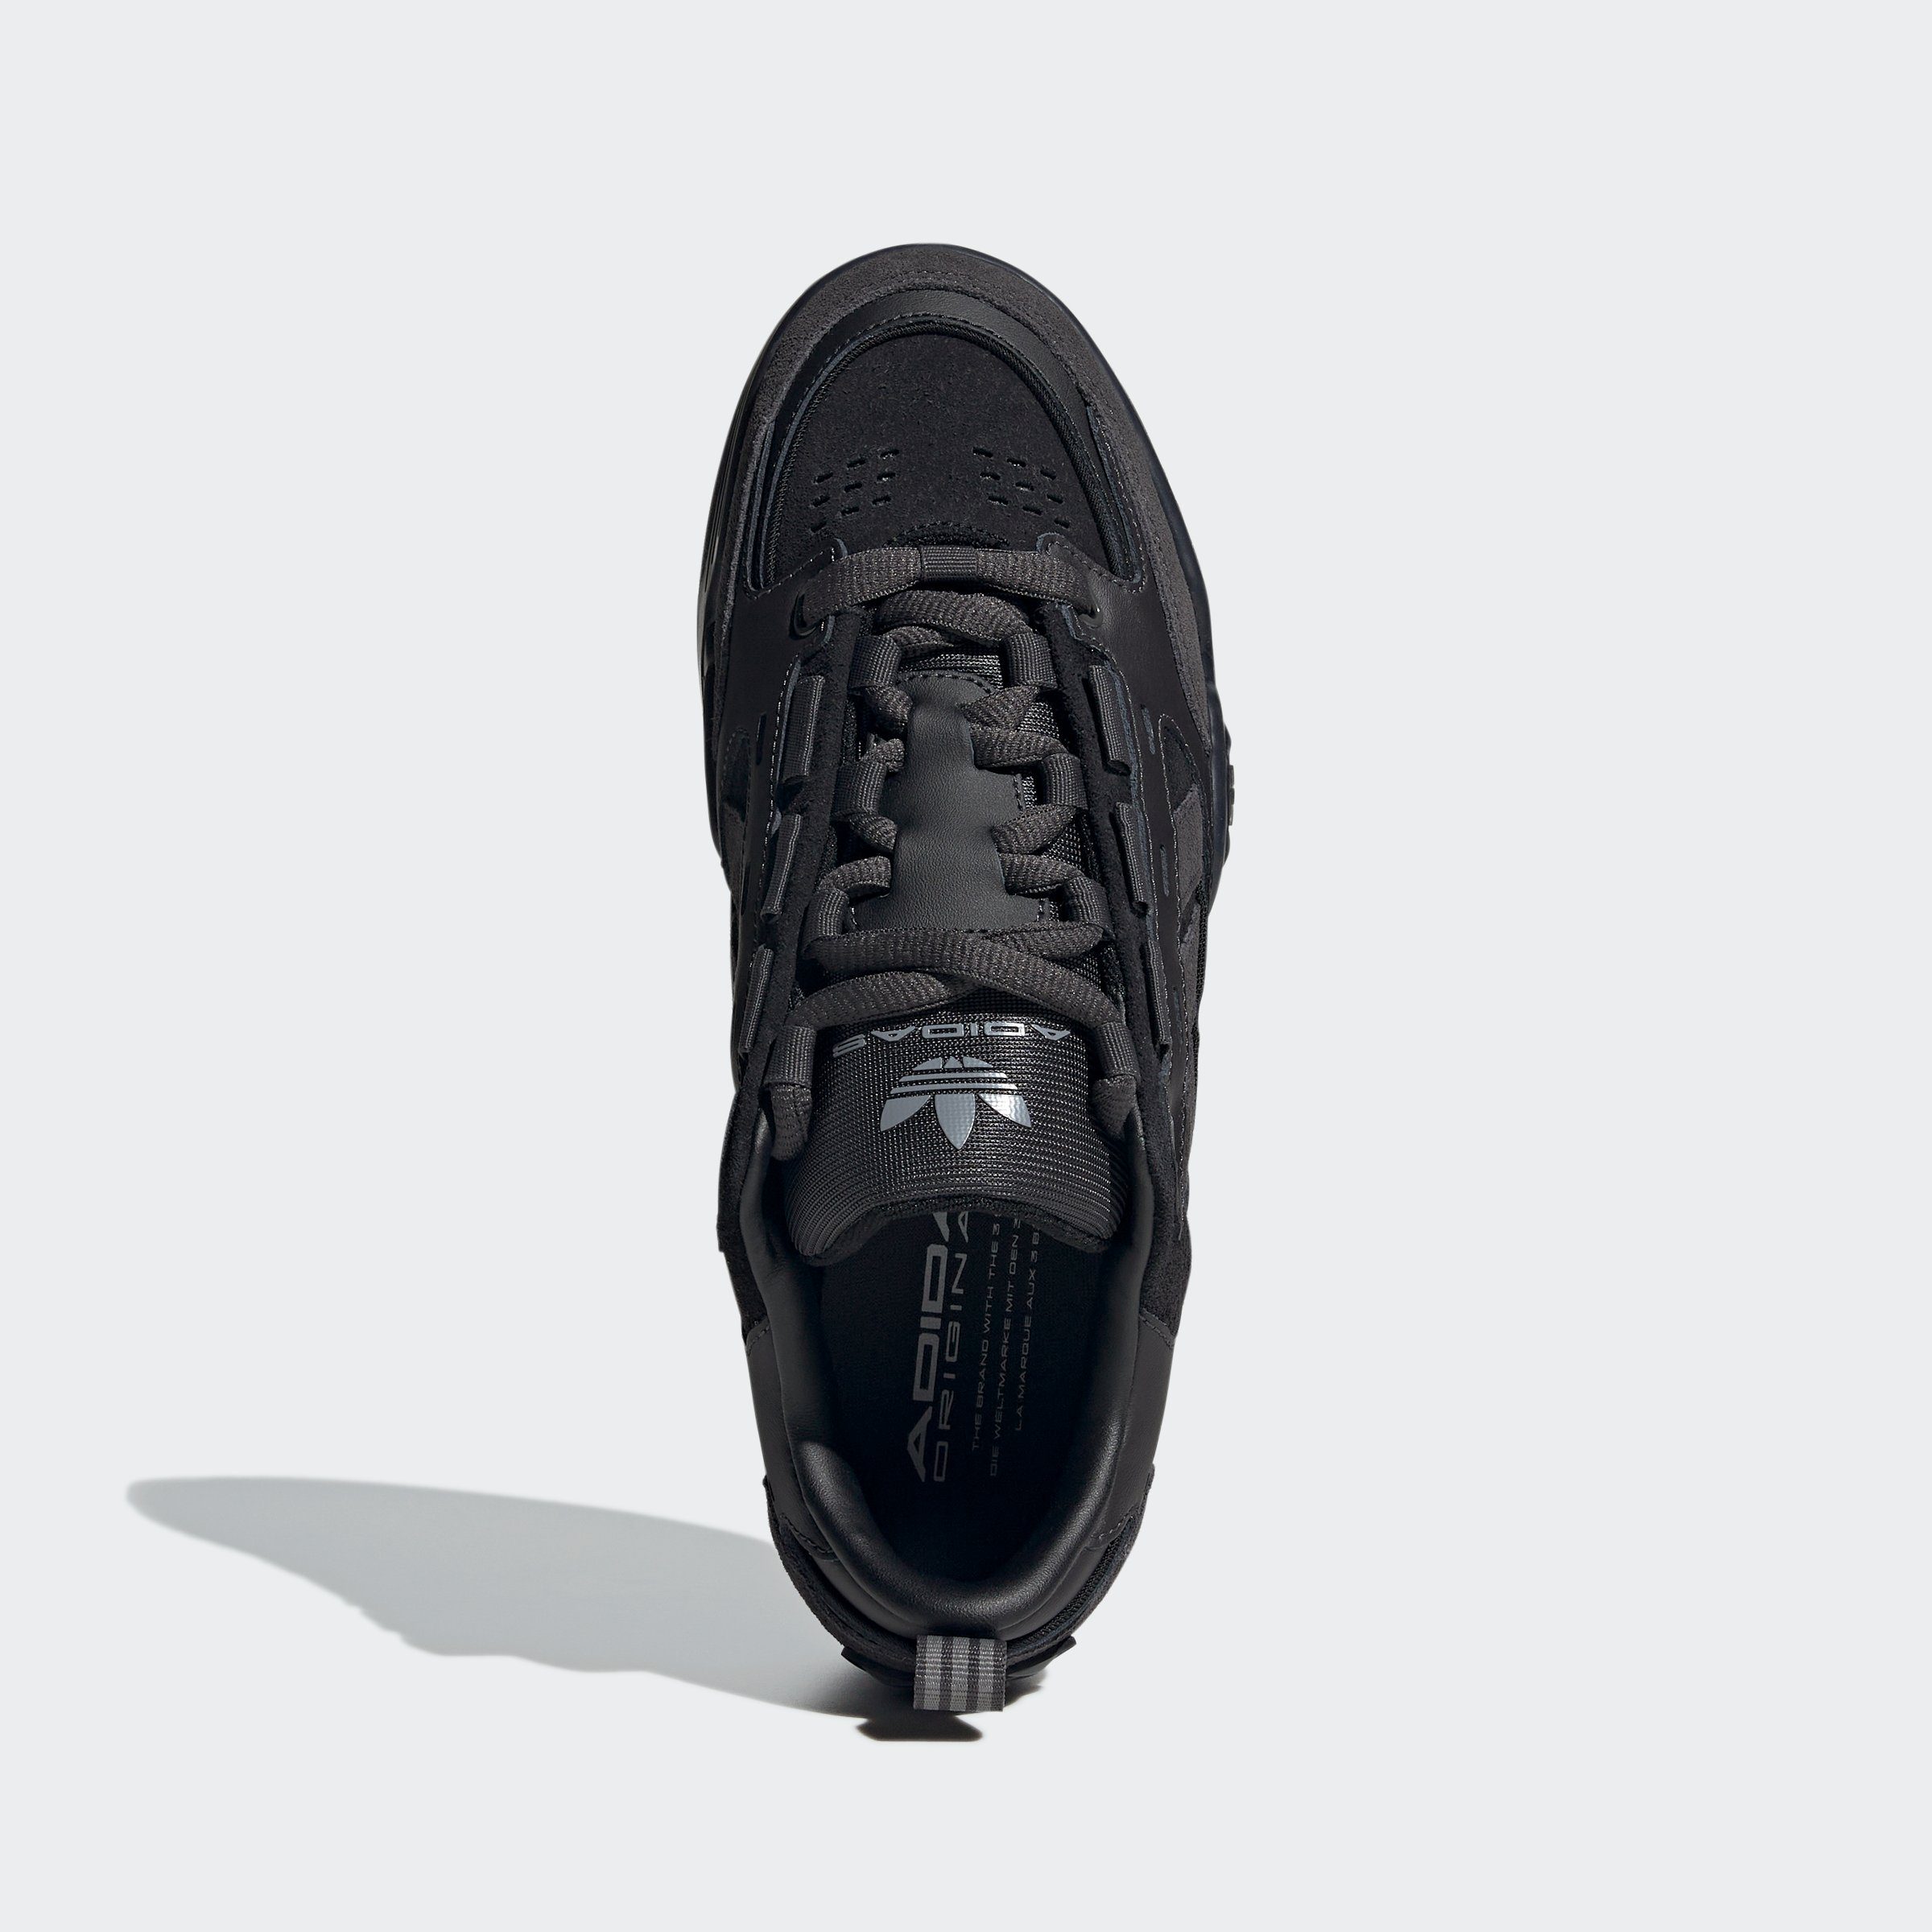 Black ADI2000 Originals / Black Core Black Sneaker Utility Utility adidas /